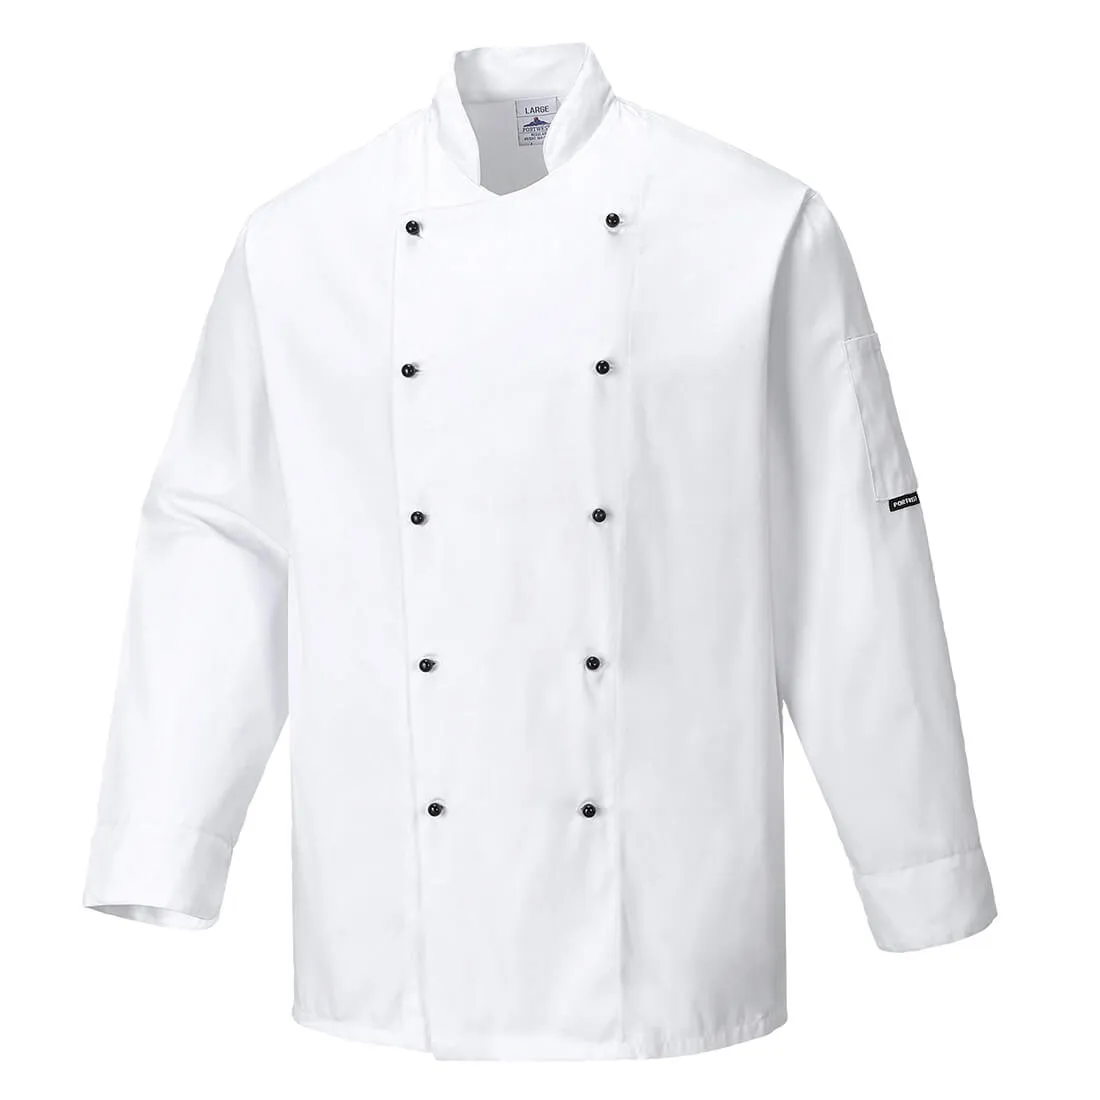 Portwest Unisex Somerset Chefs Jacket - White, S